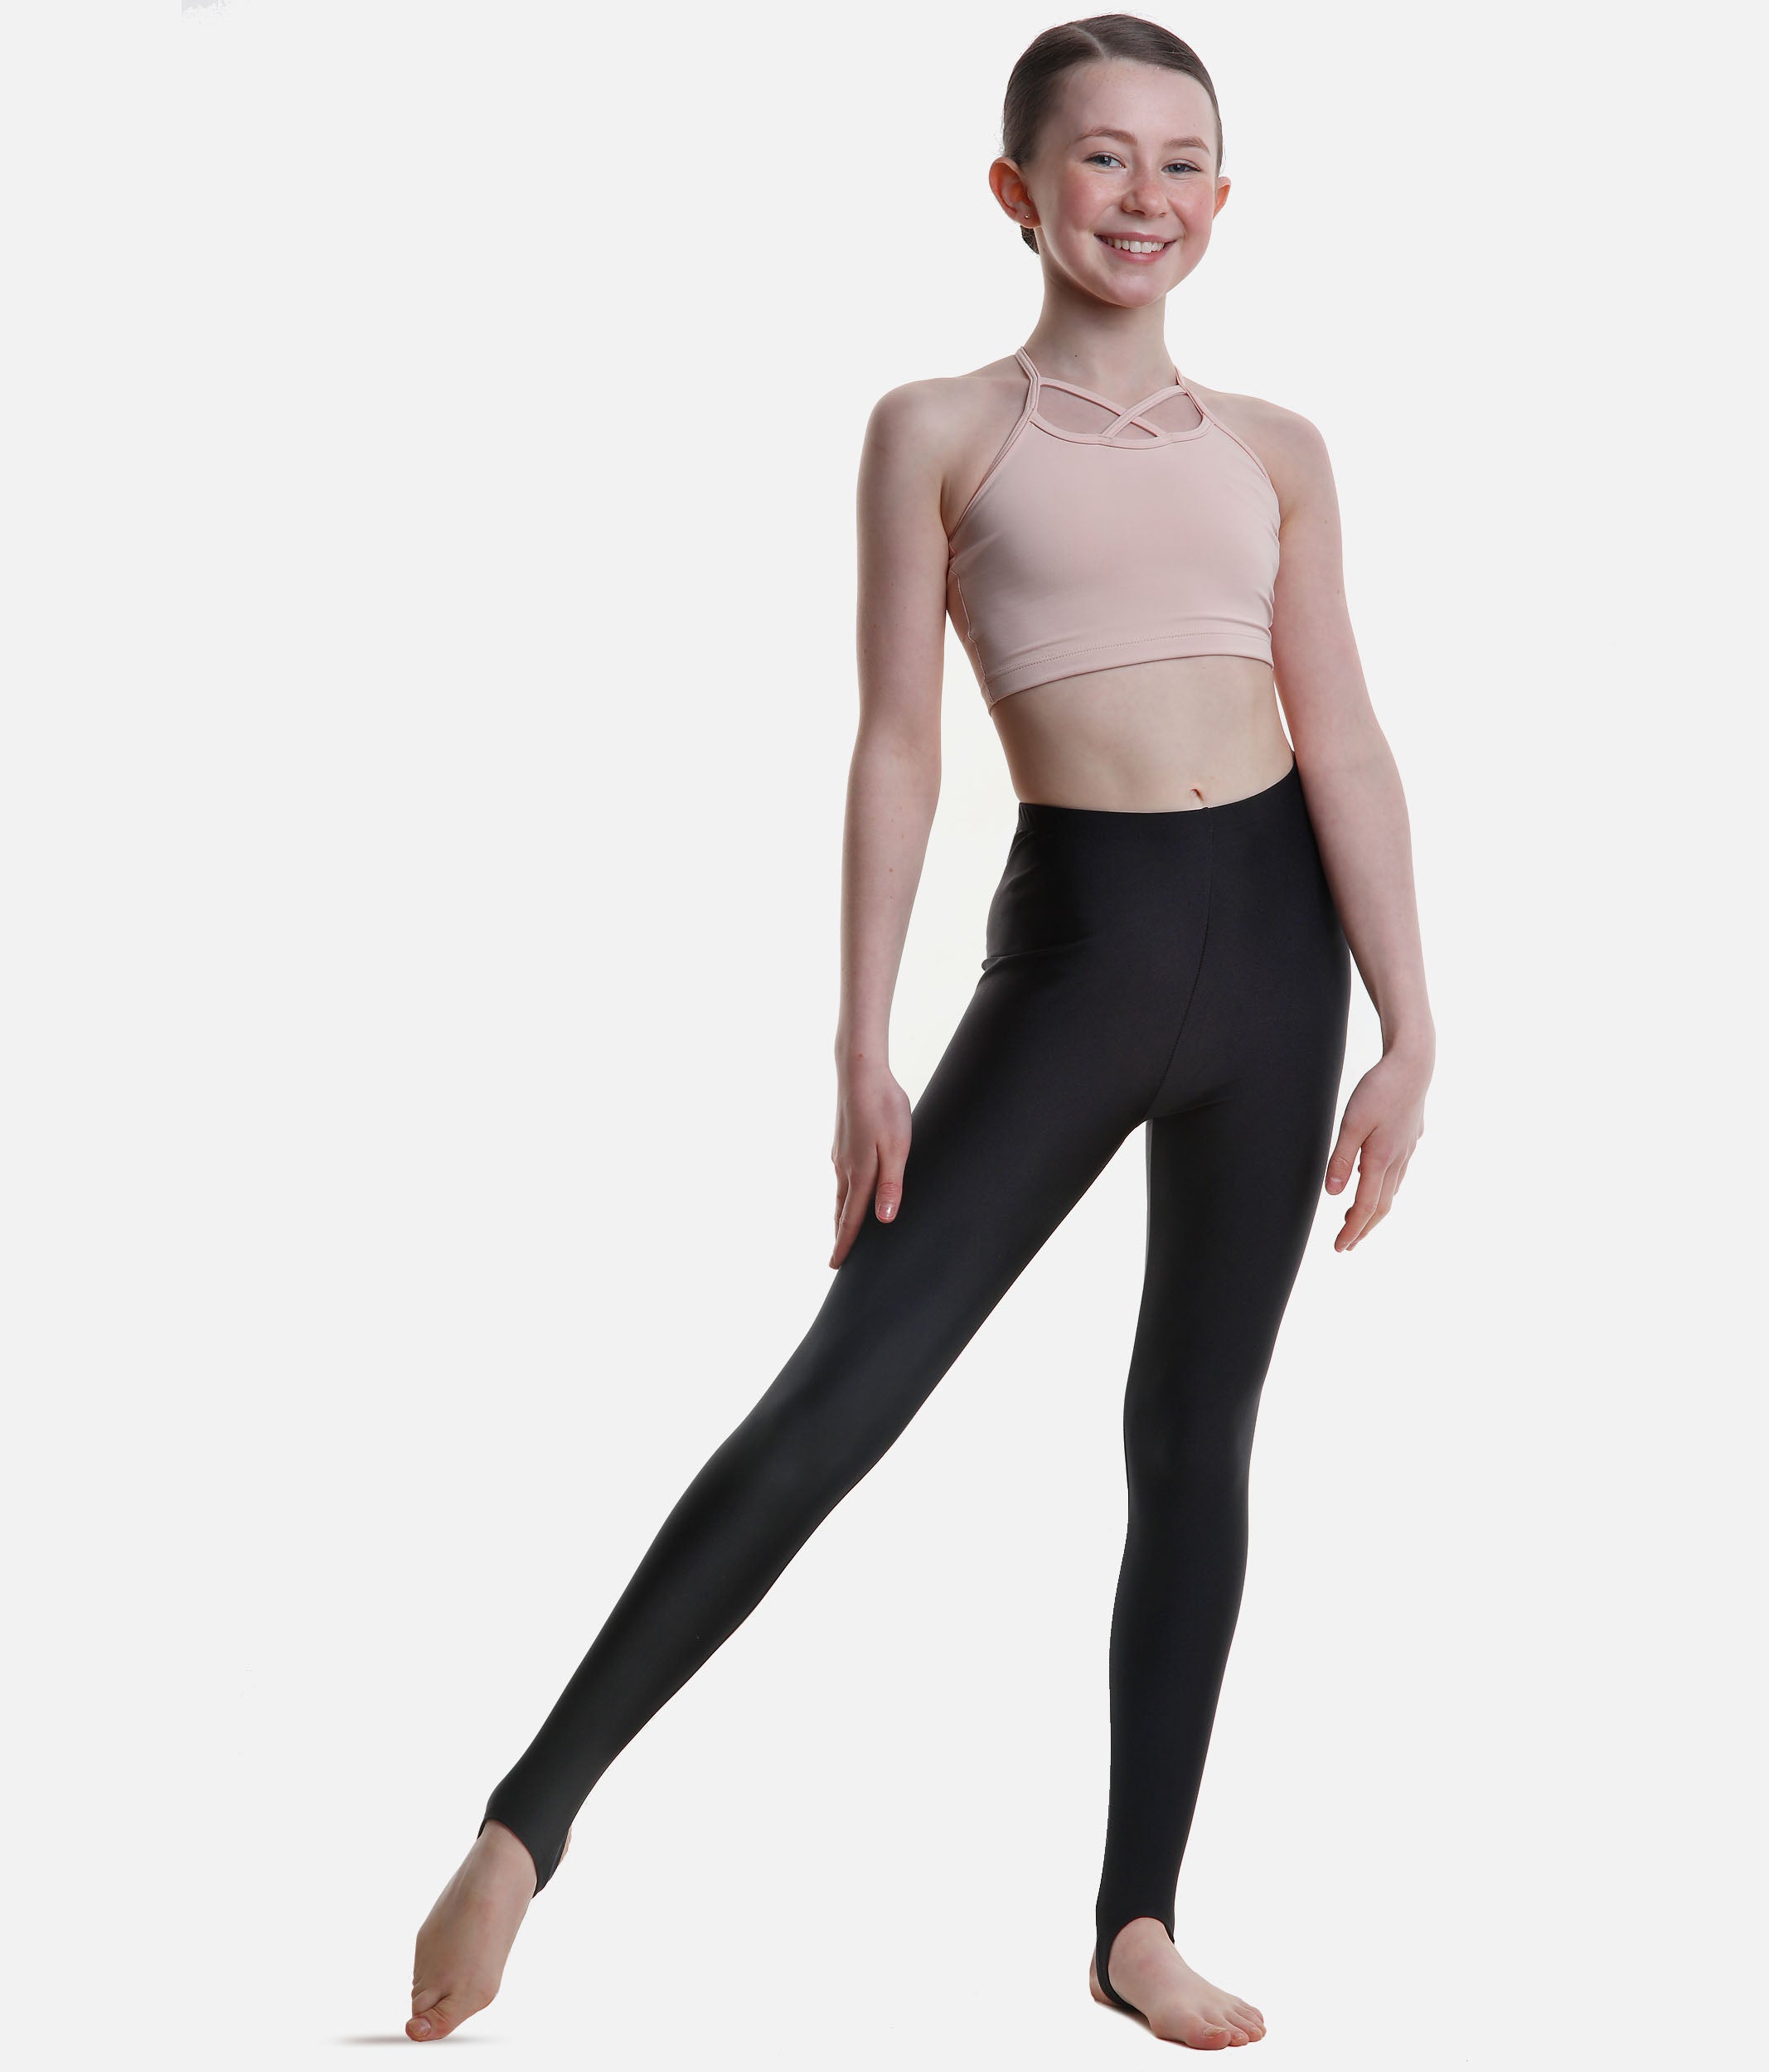 Girls Children Kids Stirrup Leggings Dance Gymnastics Yoga Nylon